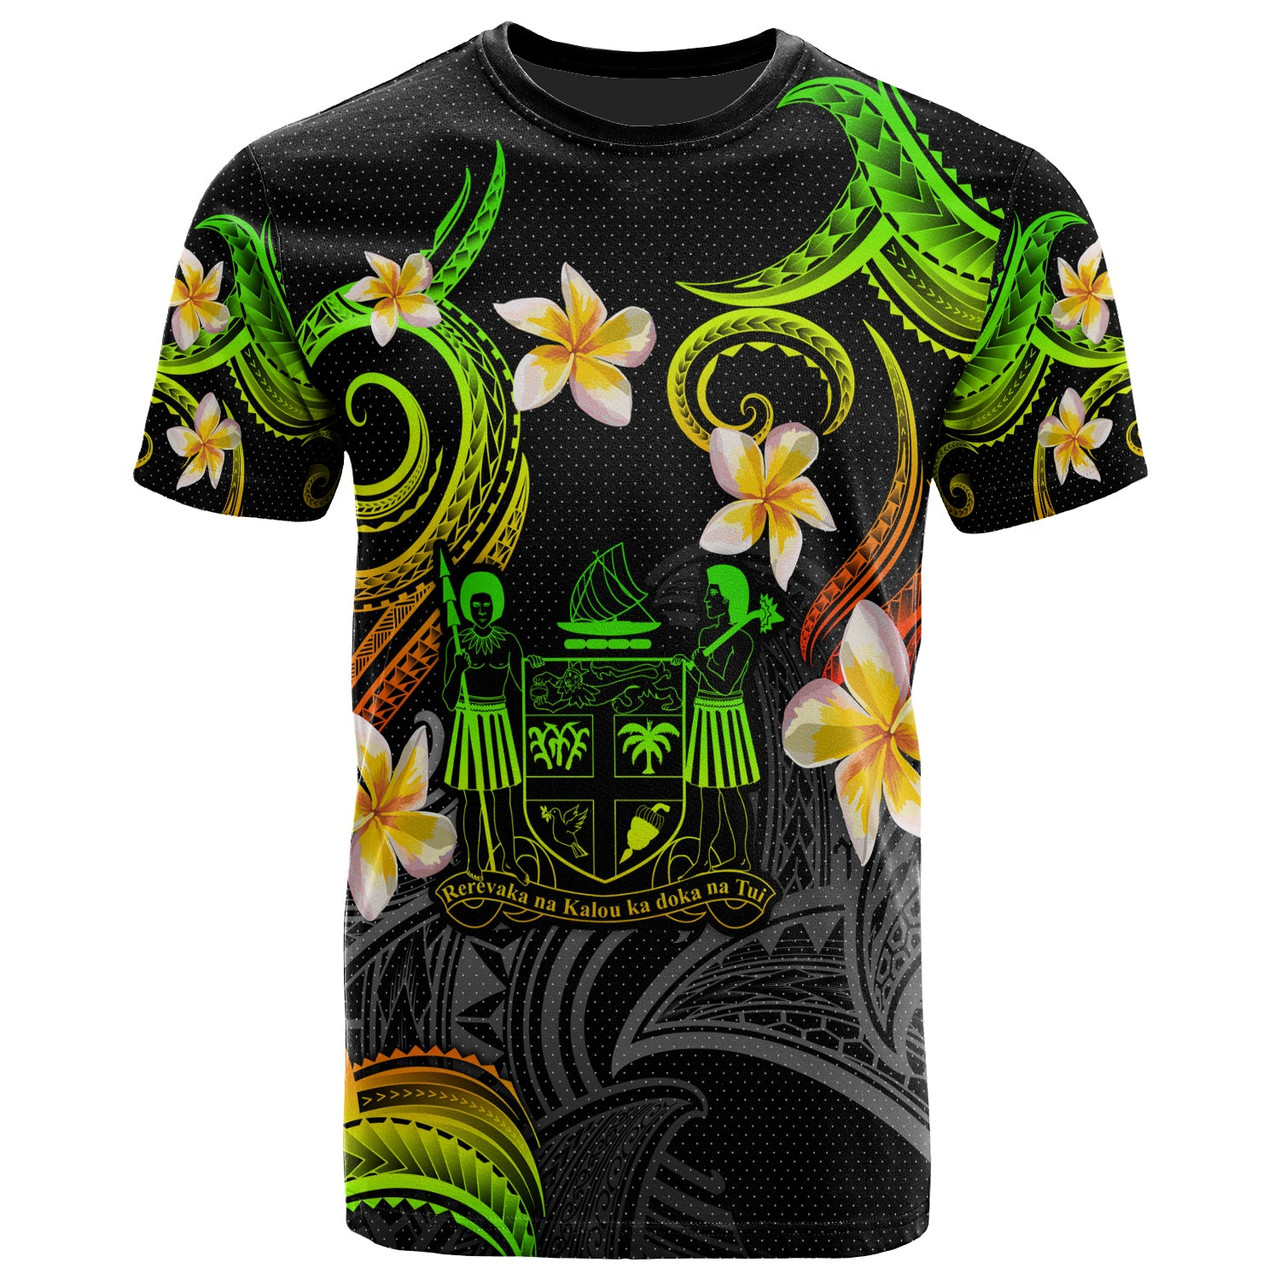 Fiji T-shirt - Custom Personalised Polynesian Waves with Plumeria Flowers (Reggae)